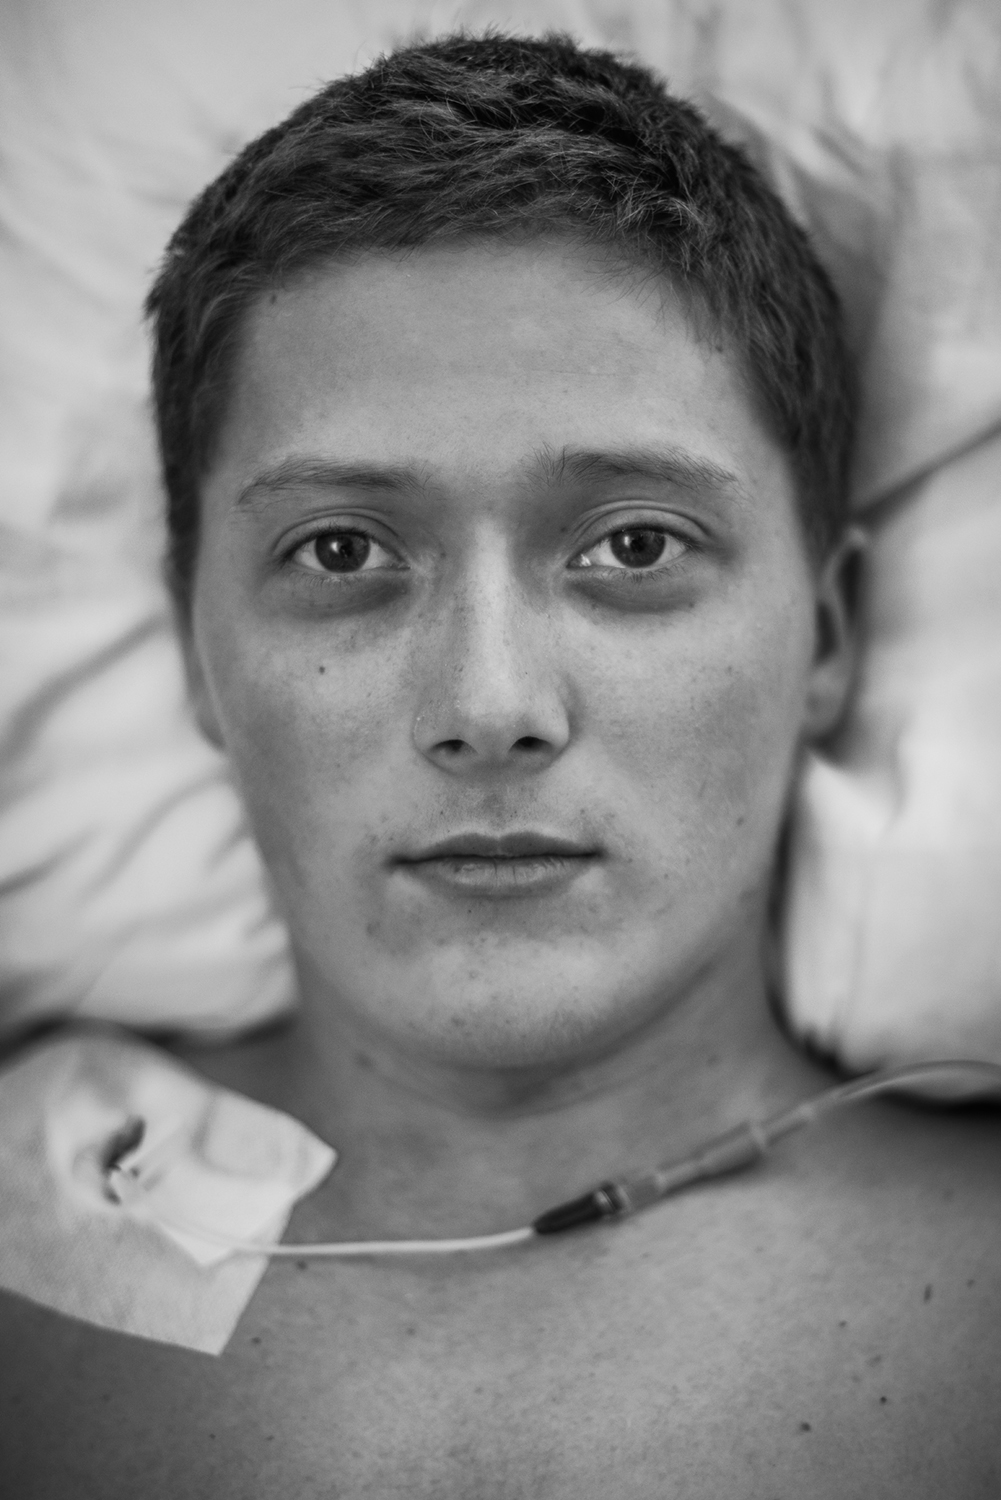 Taras Polataiko War. 11 Portraits Sergji 2014 Digital photo,  64 x 42.7. Photo Taras Polataiko.